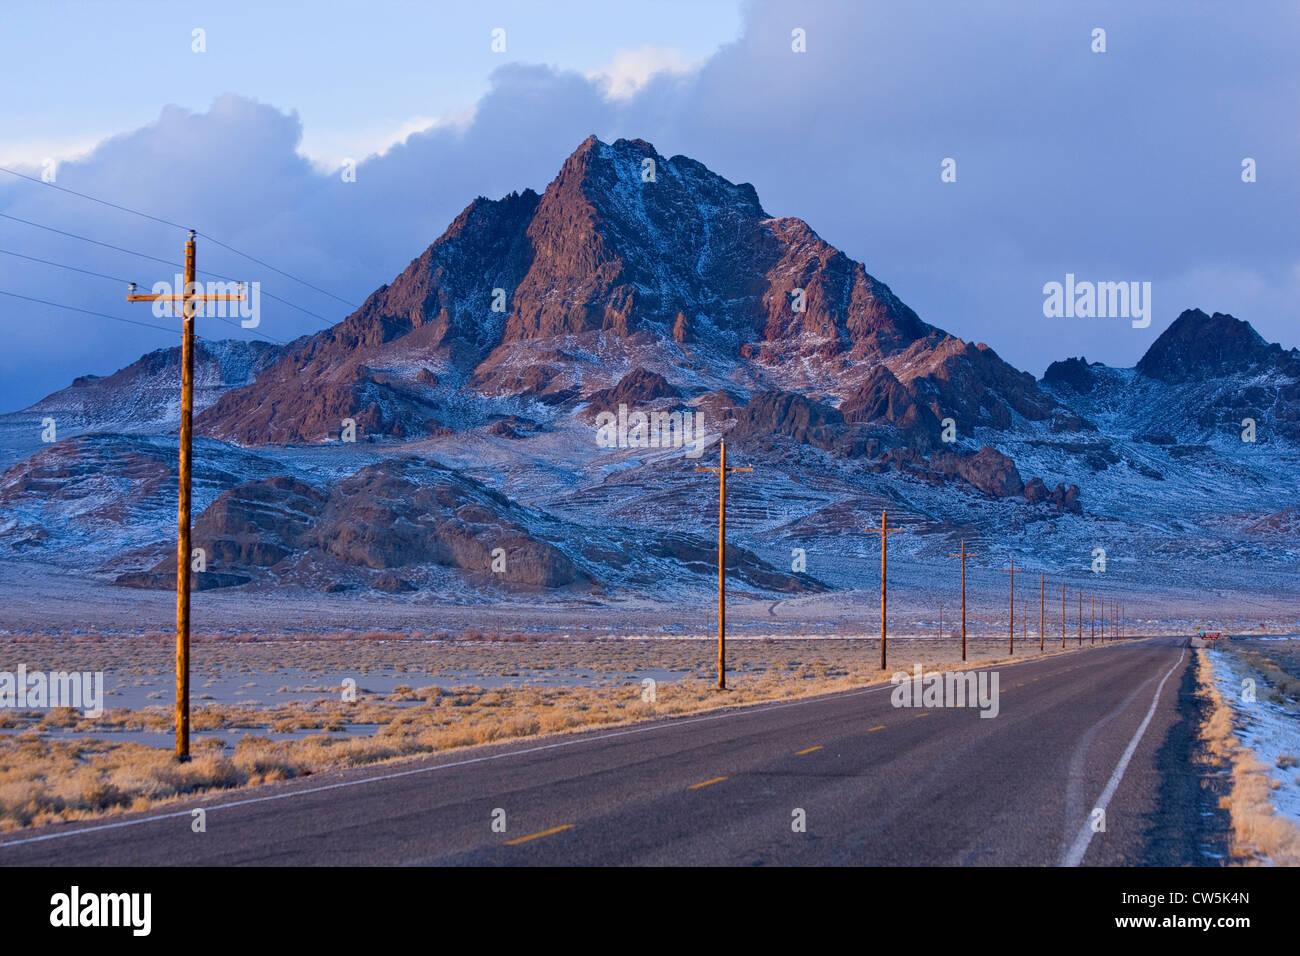 Road leading towards a mountain, Wendover Peak, Utah, USA Stock Photo